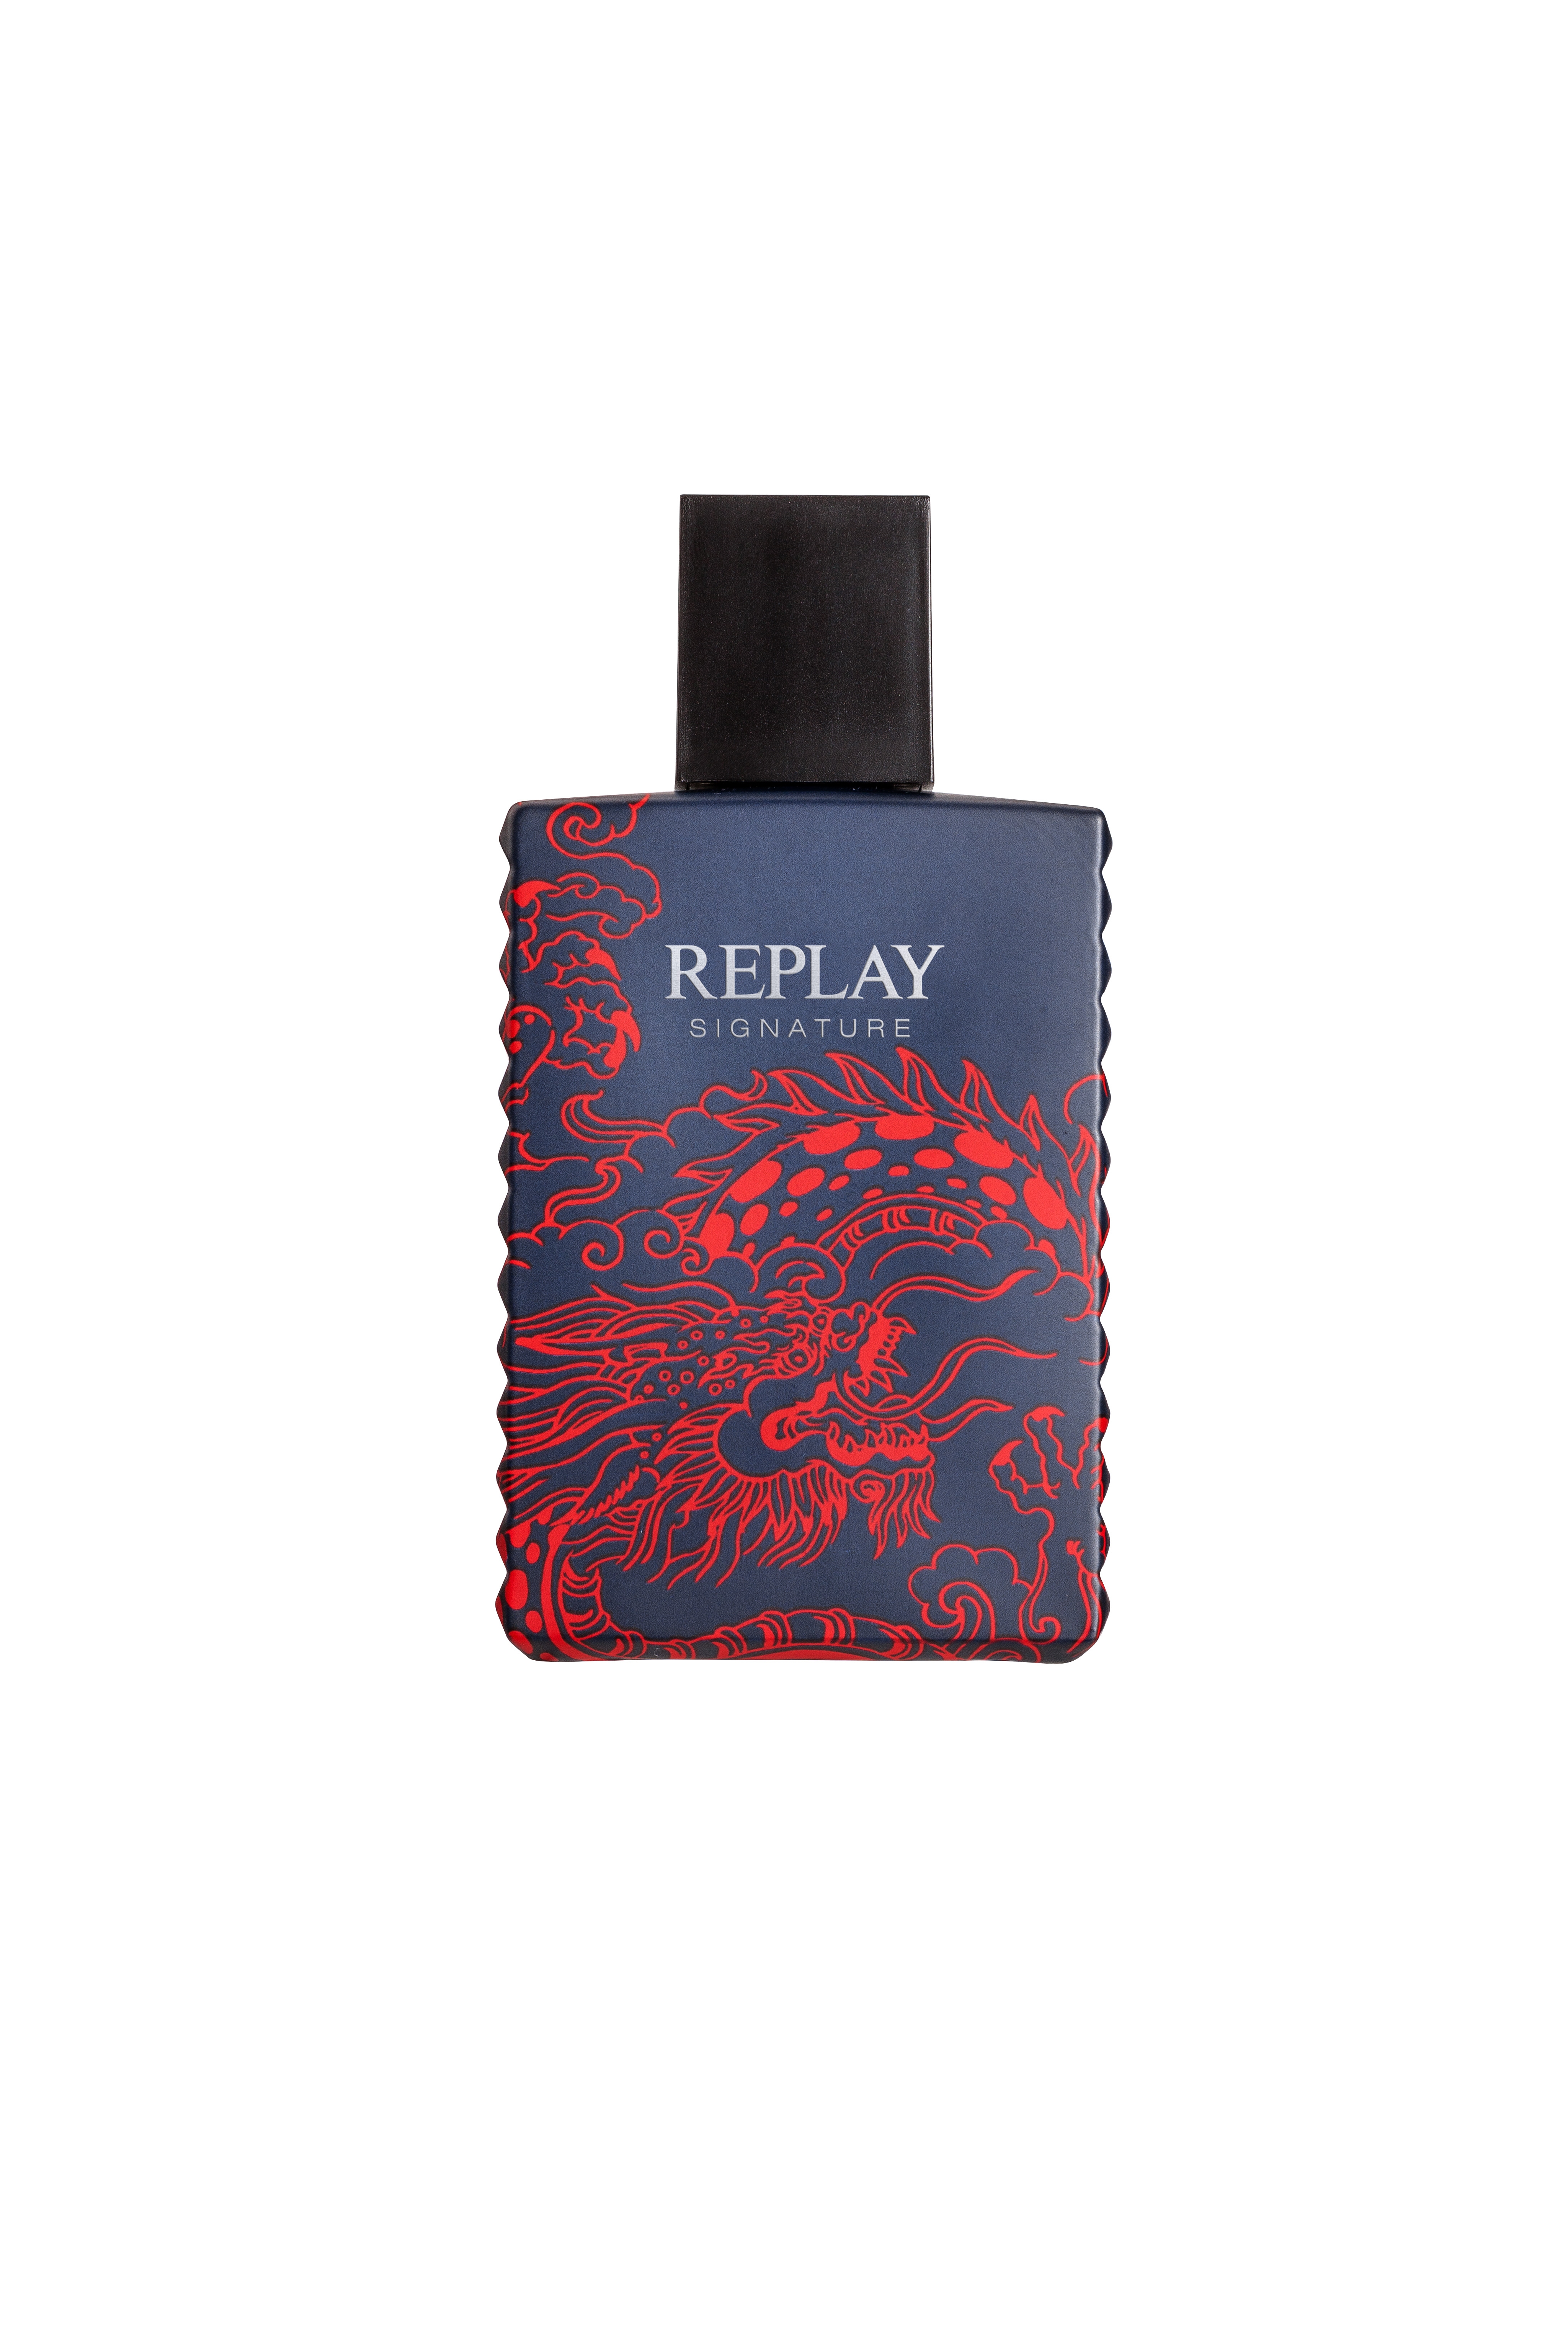 REPLAY | Replay Signature Red Dragon Eau De Toilette 100ML